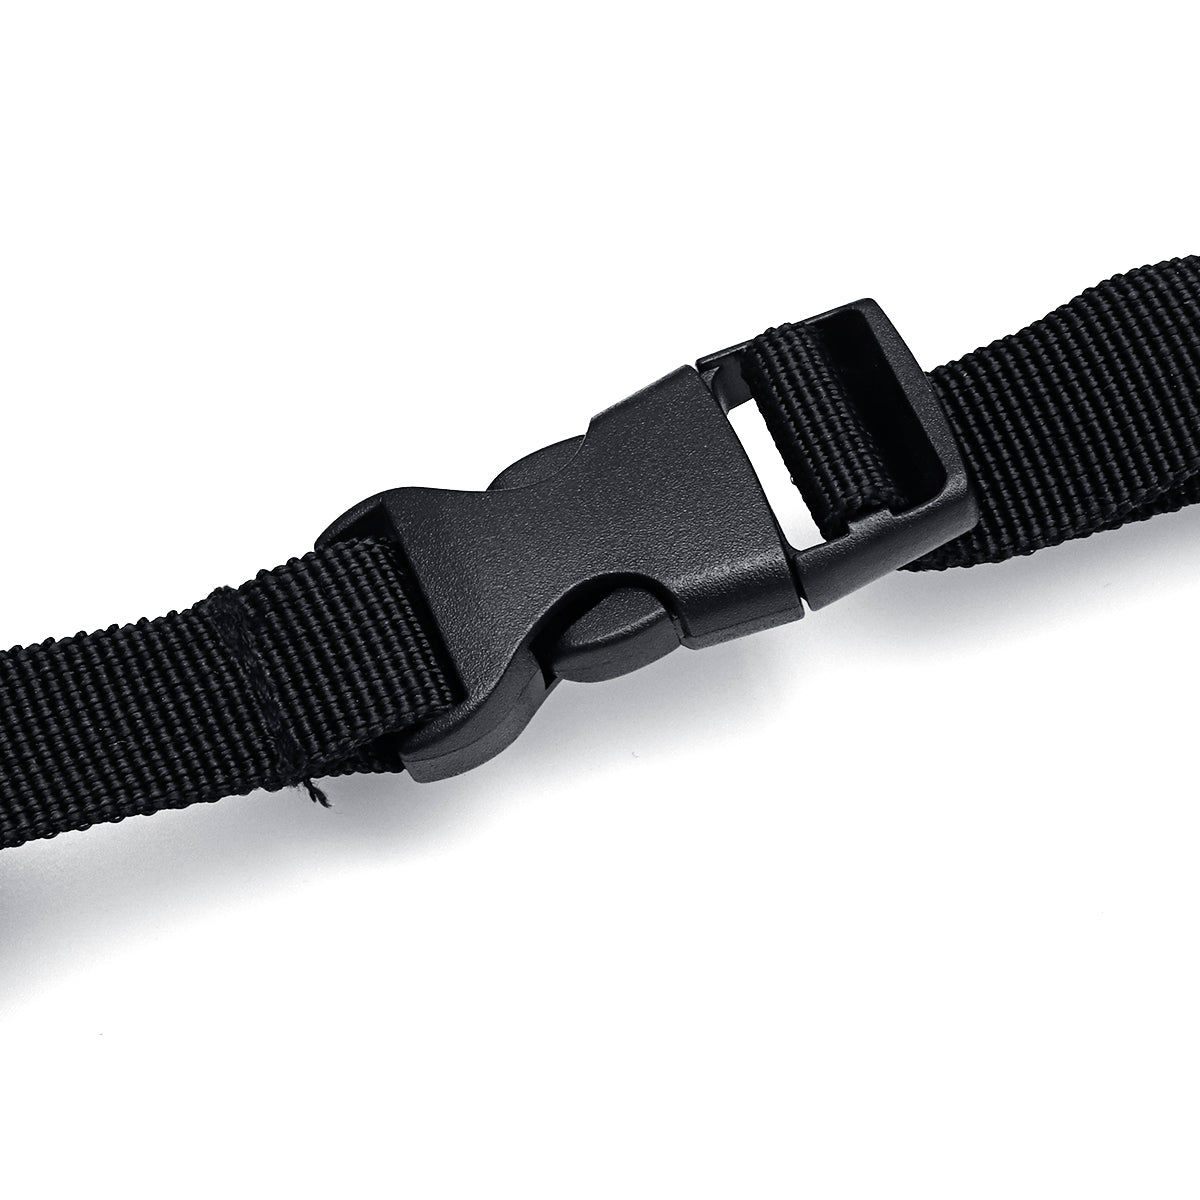 Dark Slate Gray Adjustable Heavy Duty Work Tool Bag Belt Suspender With Mobile Phone Pouch 3 Loops